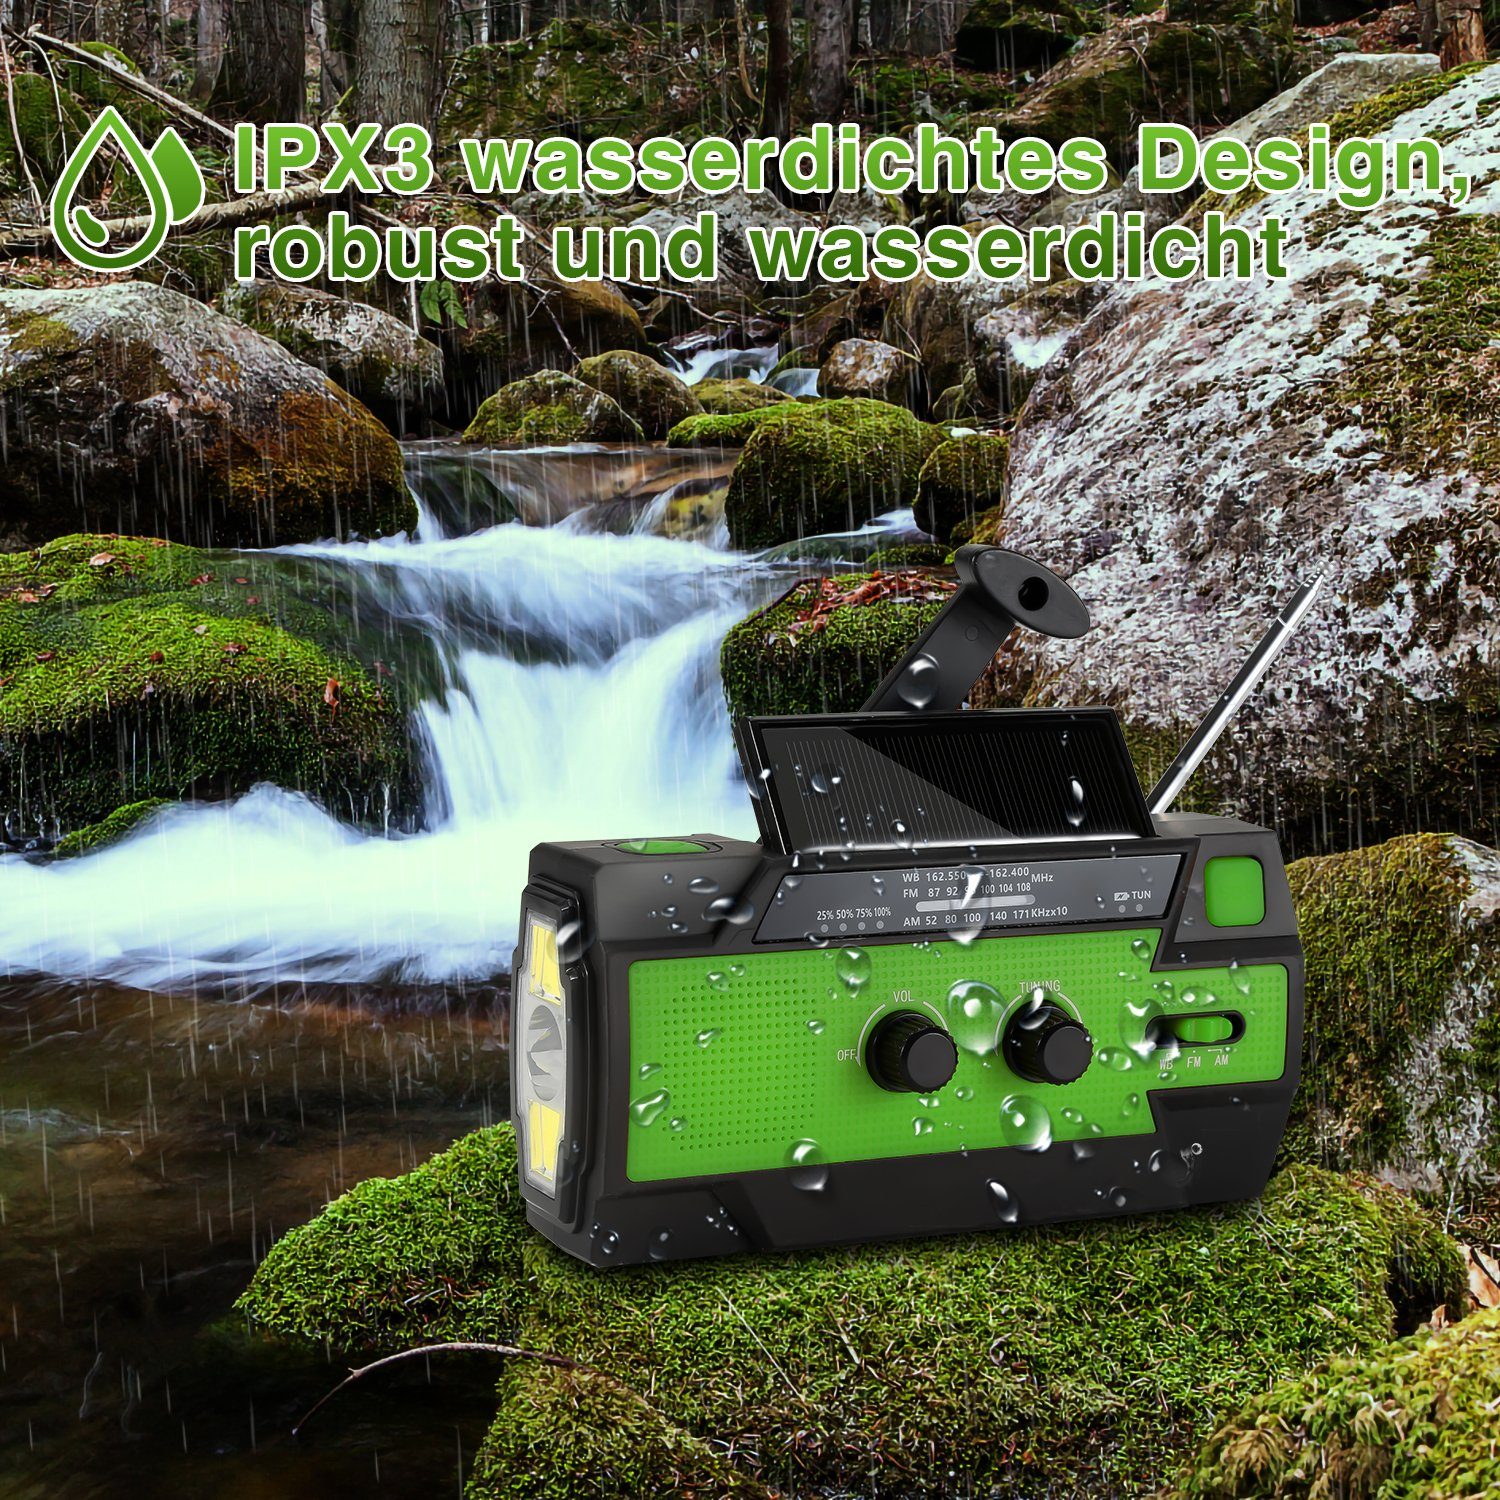 Radio Lospitch Tragbar AM/FM 4000mAh Radio Solar USB Wiederaufladbar Kurbelradio